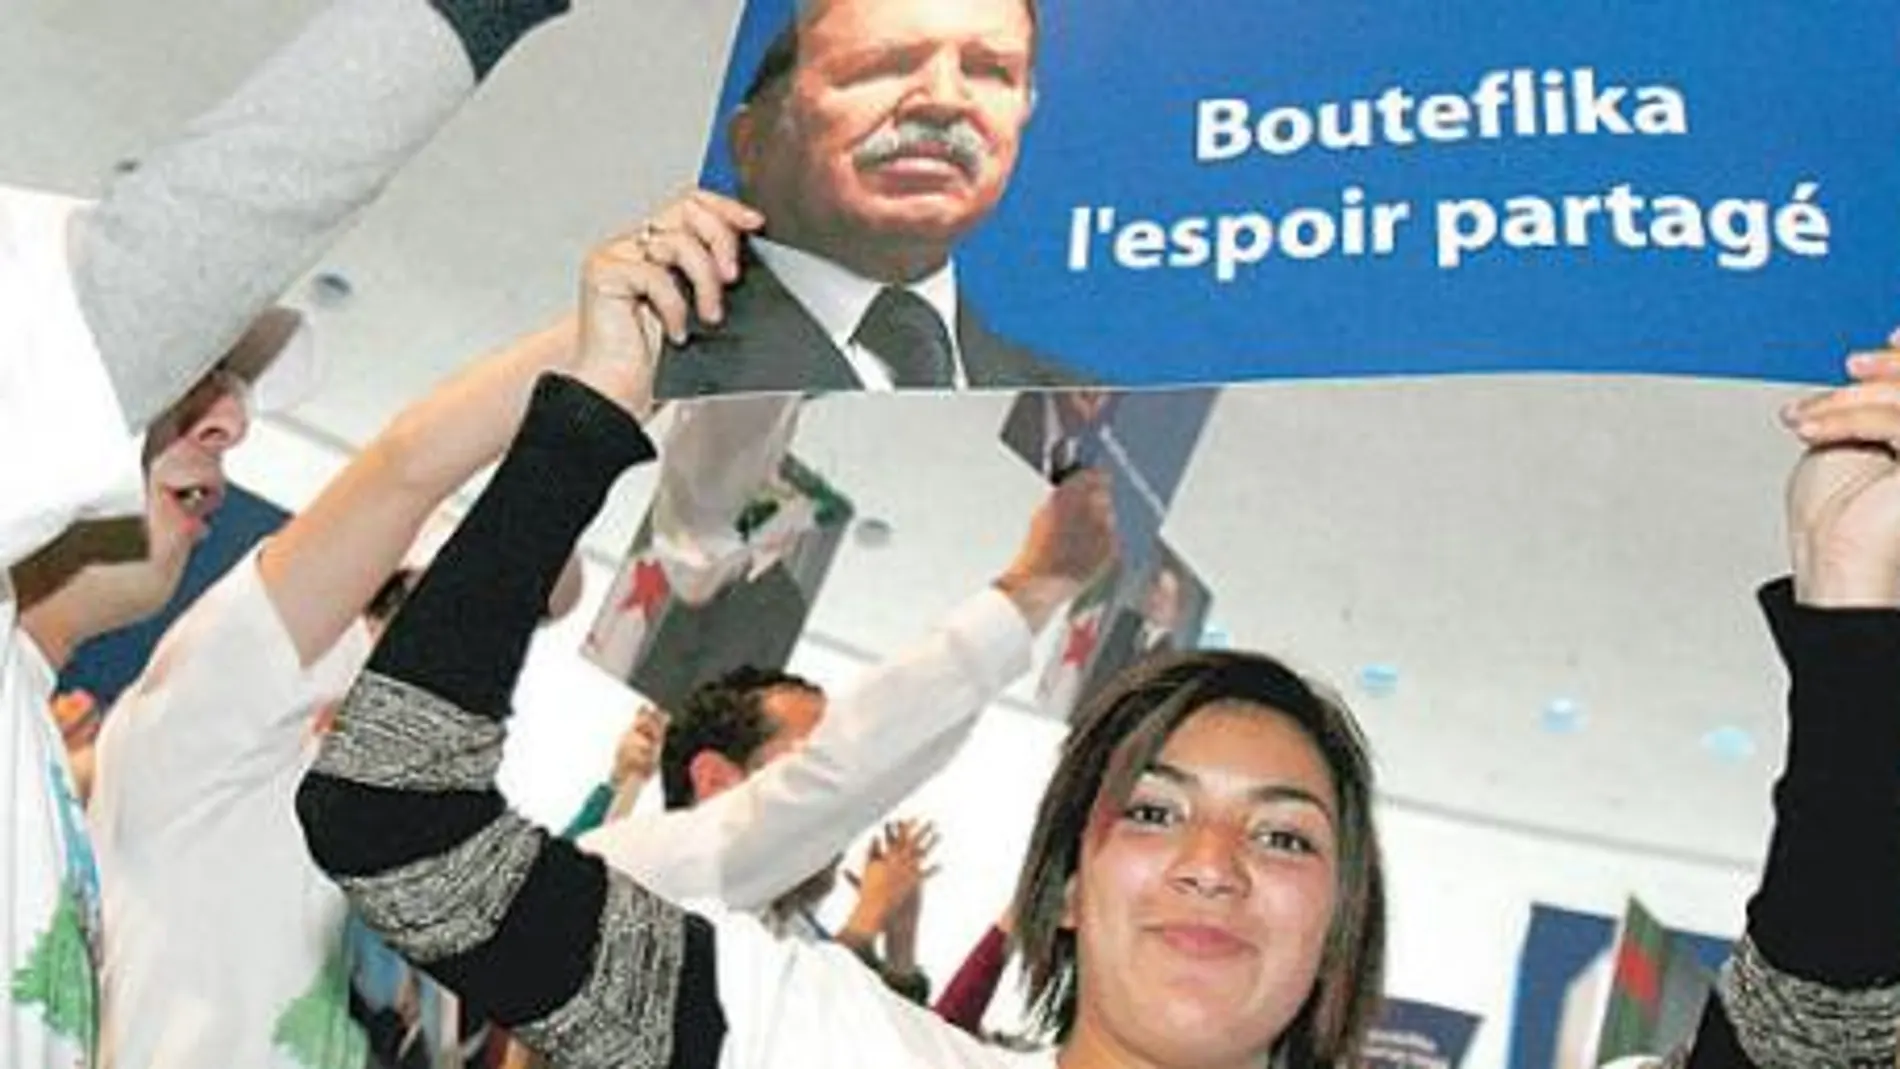 Buteflika se encamina hacia su tercer mandato frente al islamismo